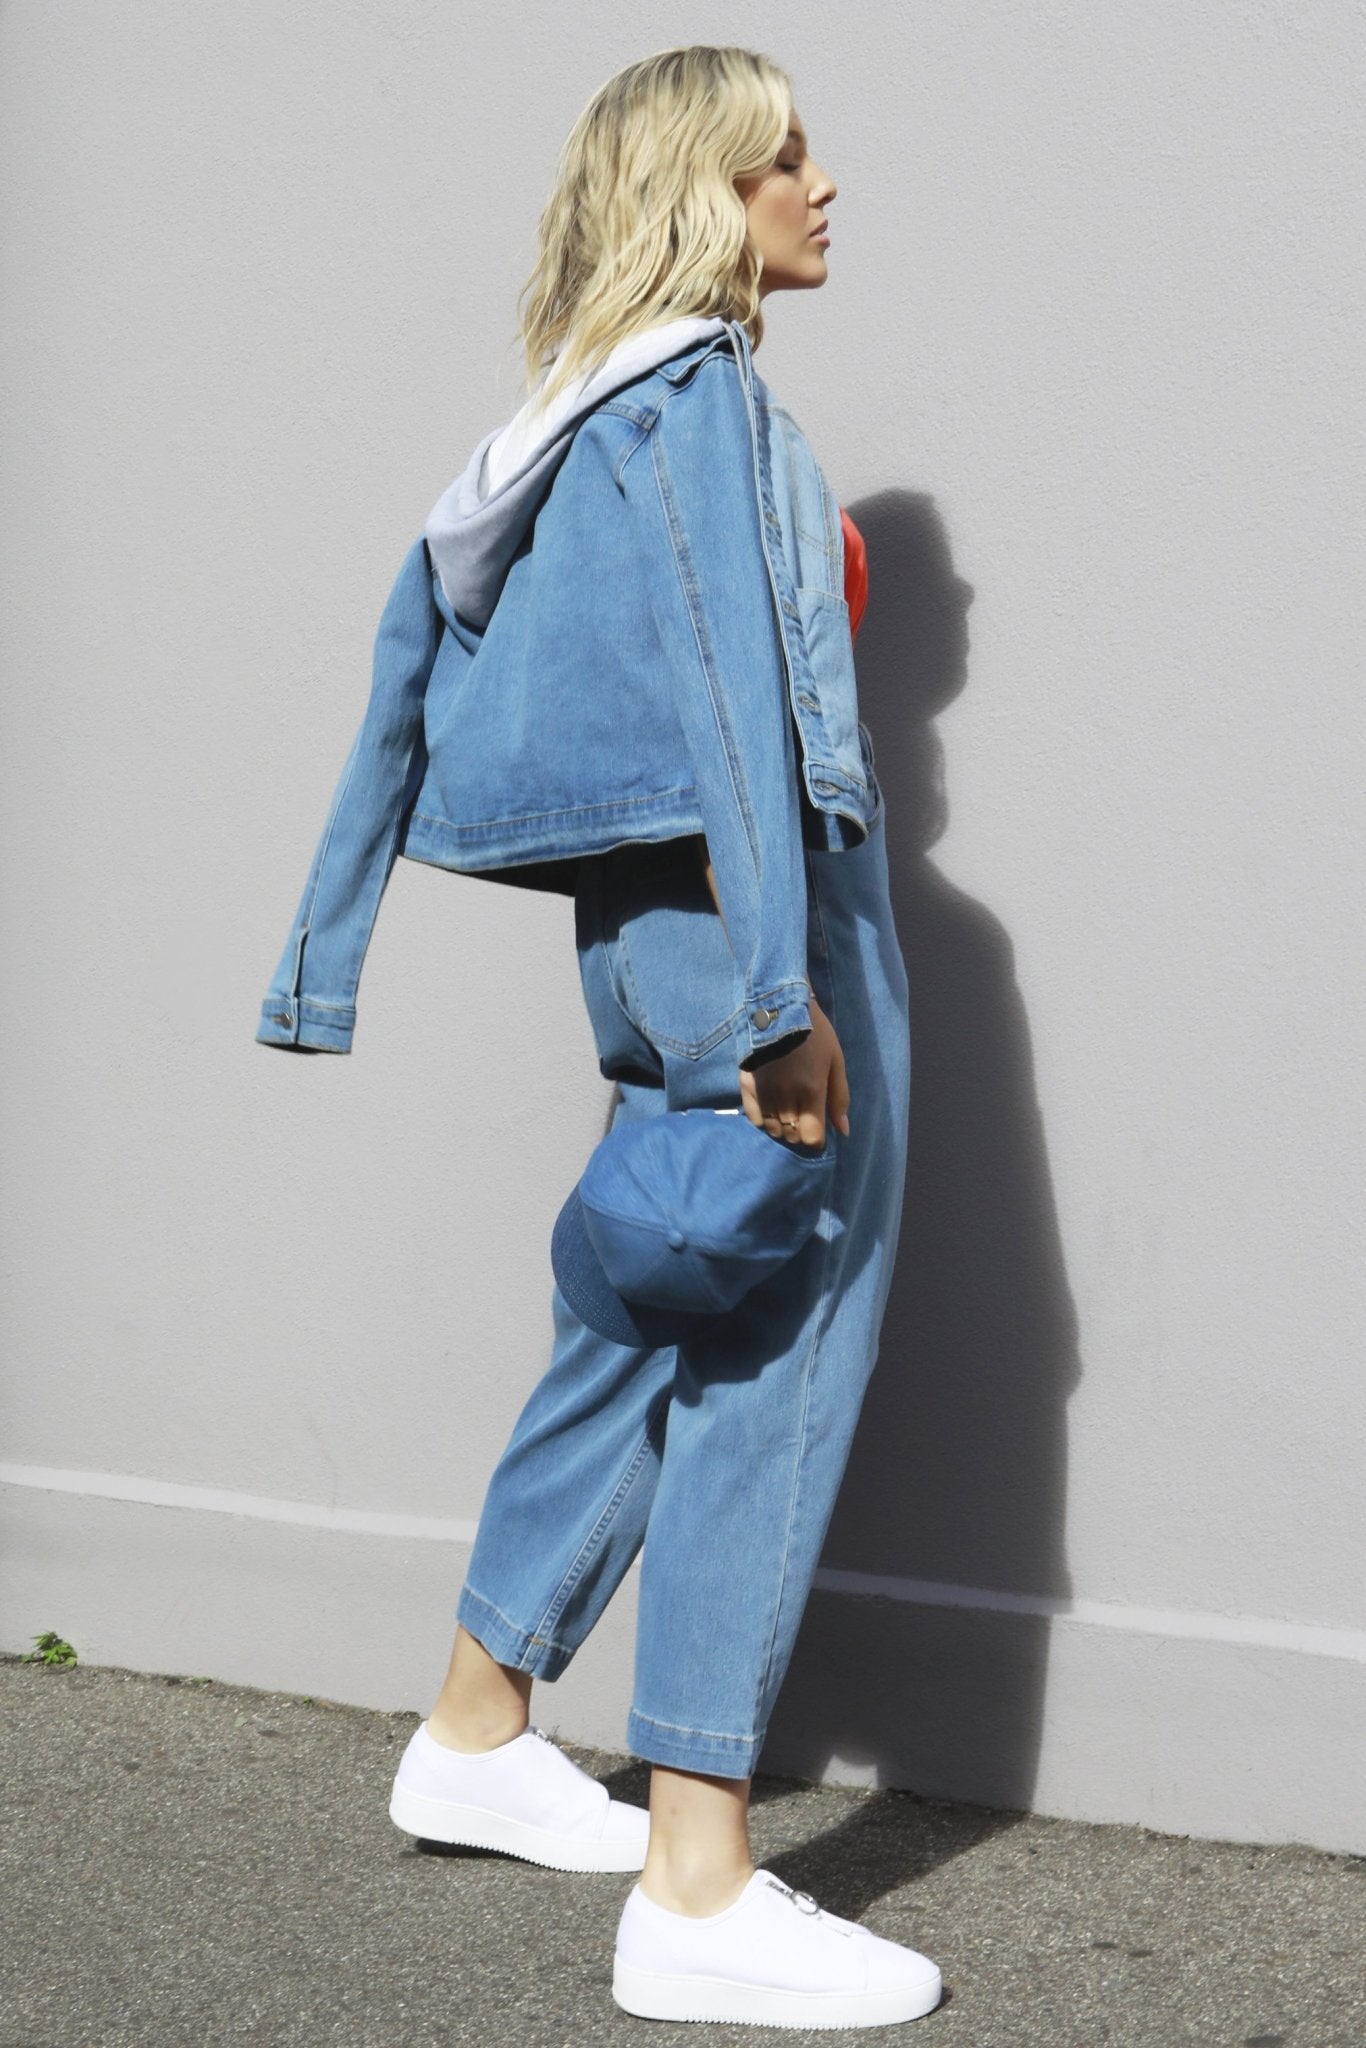 Betty Basics Gunner Denim Jacket in Vintage Blue - Hey Sara